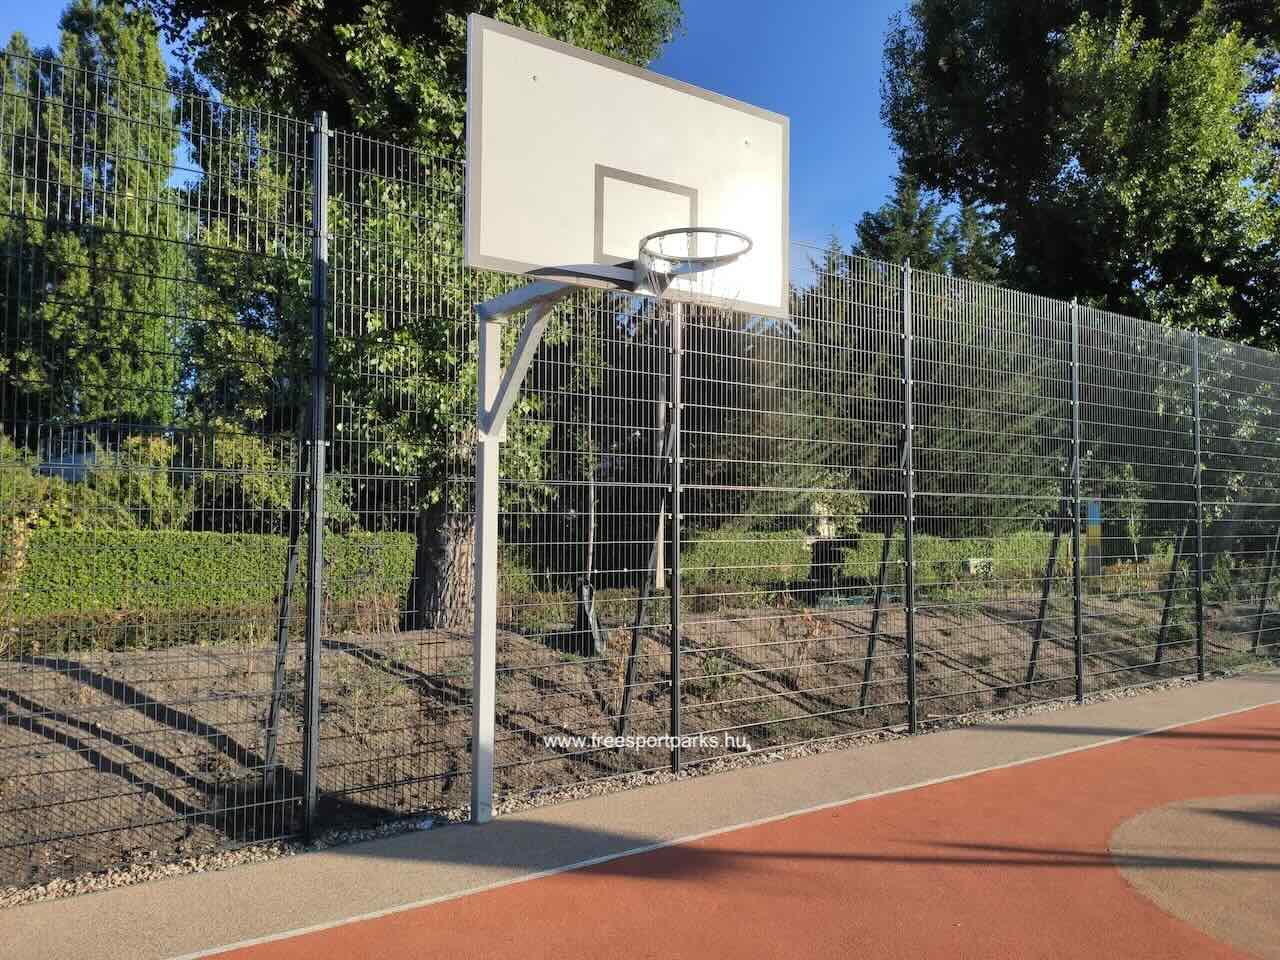 kosárlabda palánk, Pünkösdfürdő Park - Free Sport Parks Blog